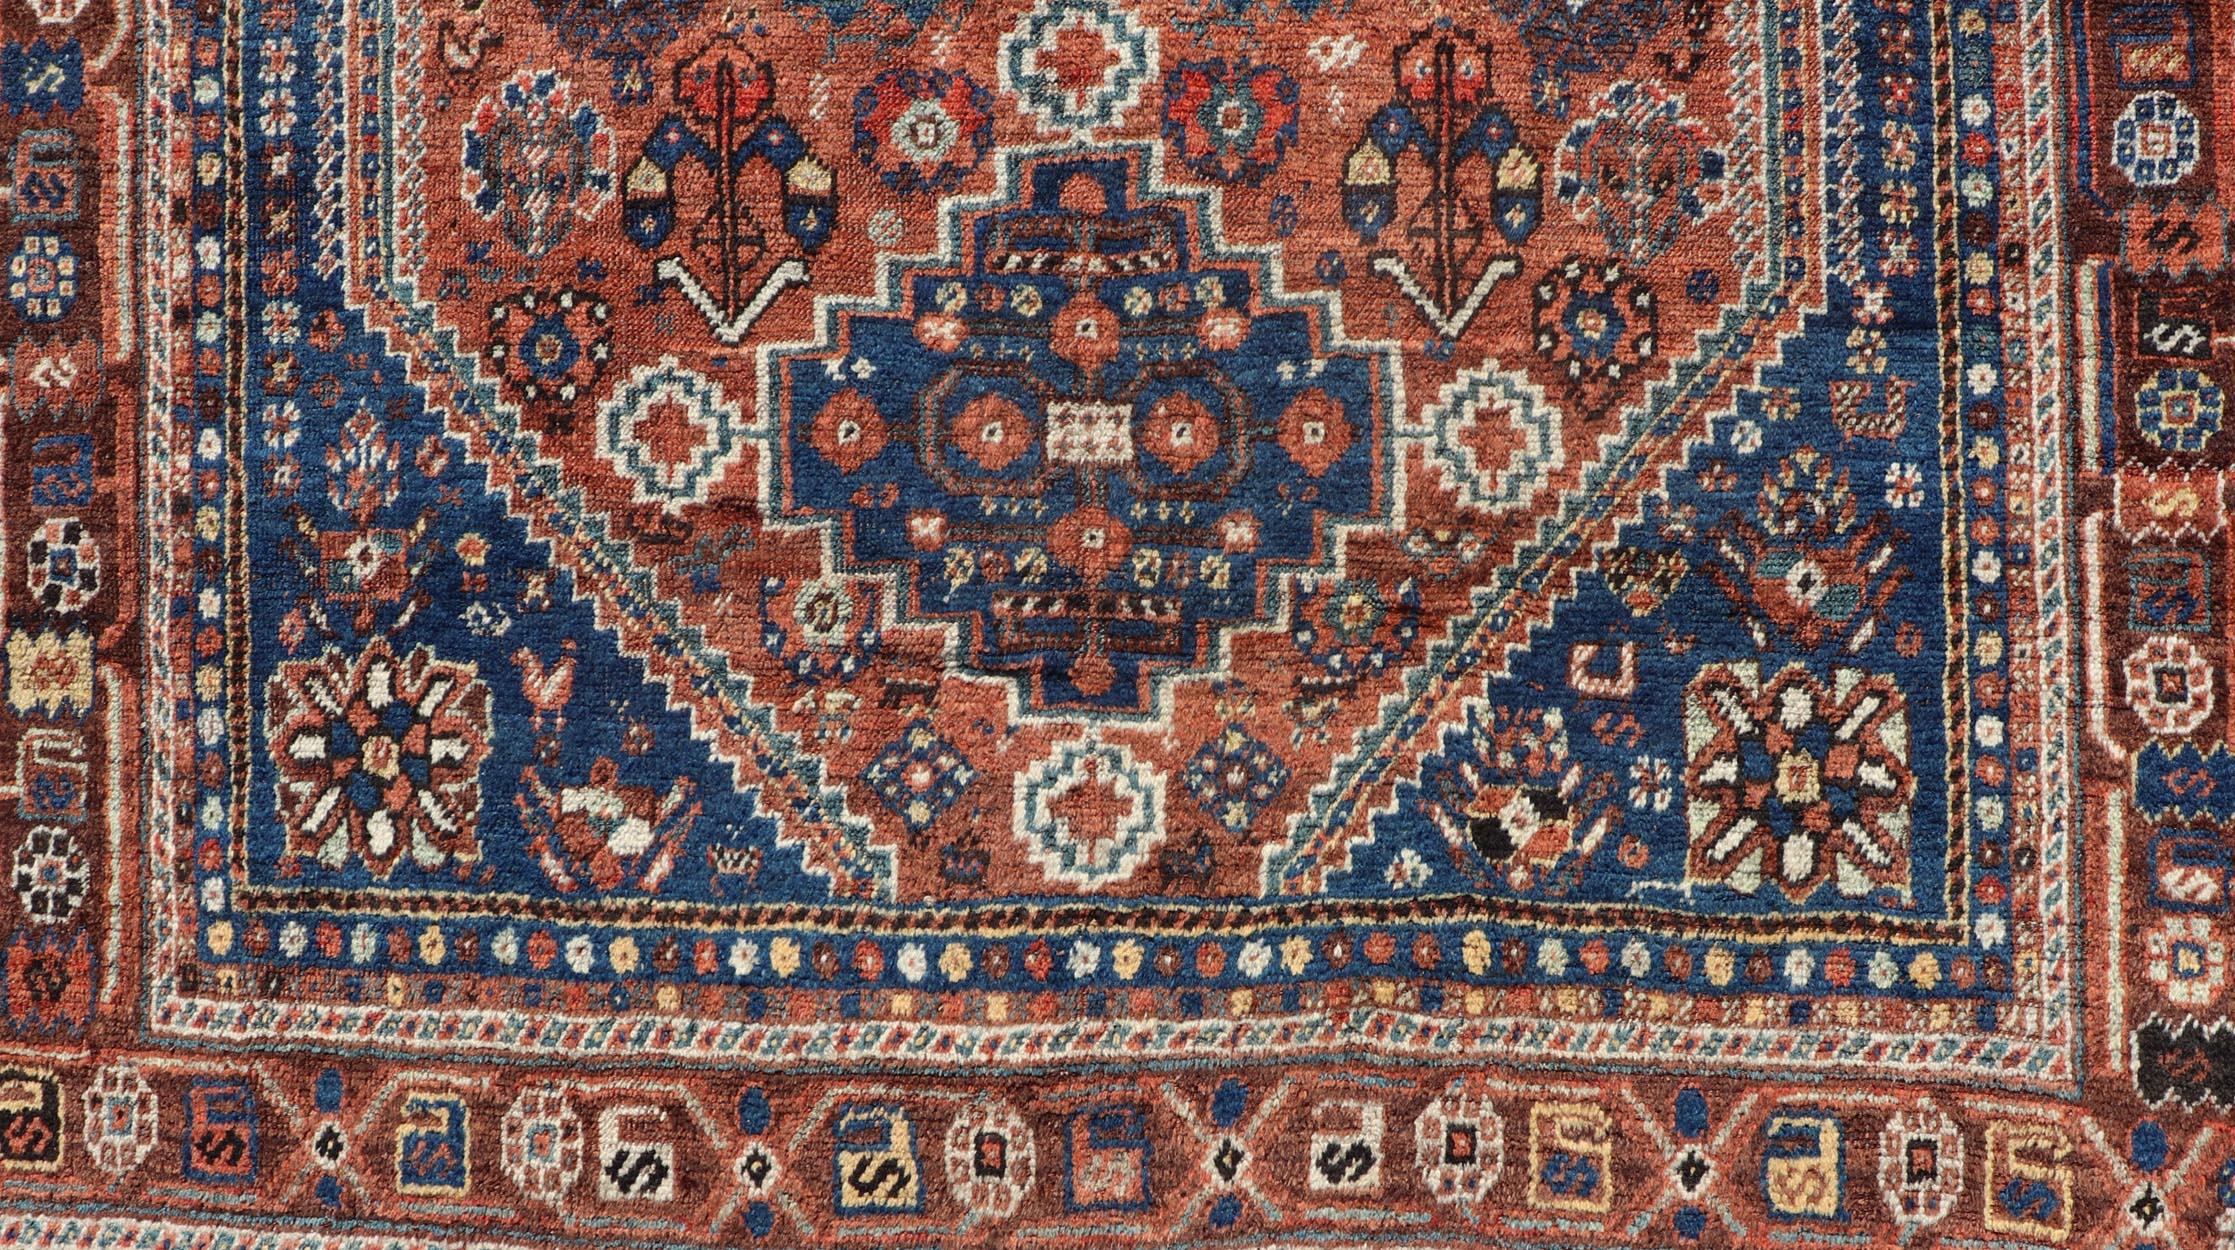 Persian Shiraz antique rug in blue and brunt orange with Medallion geometric design, Keivan Woven Arts / rug EMB-9706-P13456, country of origin / type: Iran / Shiraz, circa 1920.

Measures: 5'2 x 6'10.